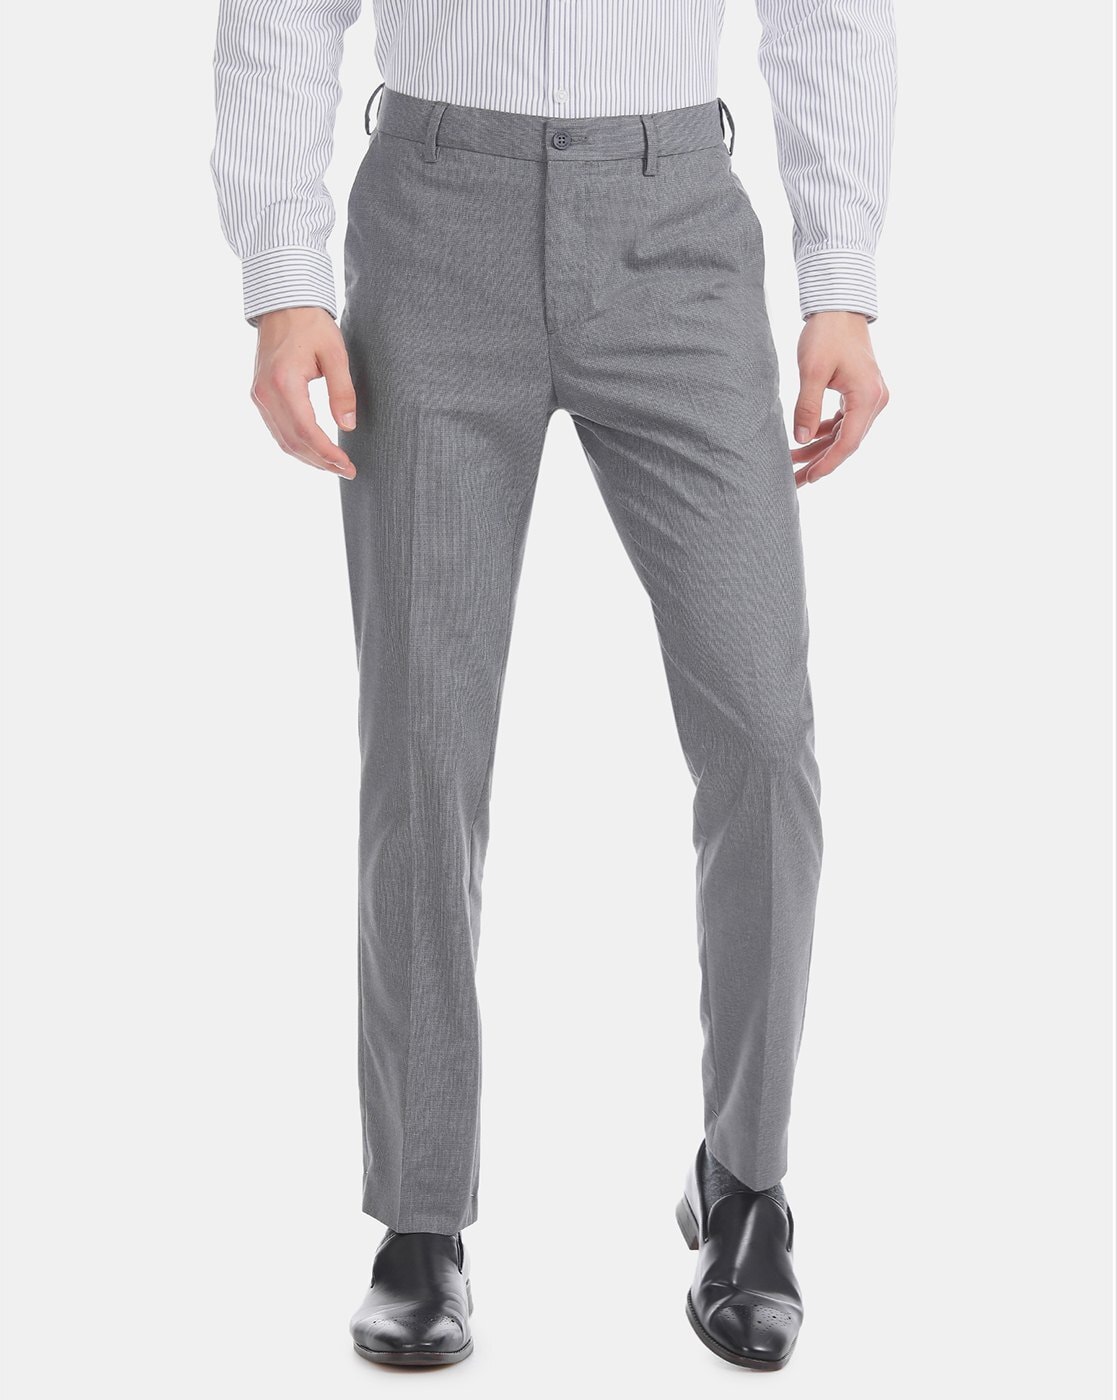 Buy Excalibur Dark Grey Flat Front Super Slim Fit Trousers for Men Online   Tata CLiQ